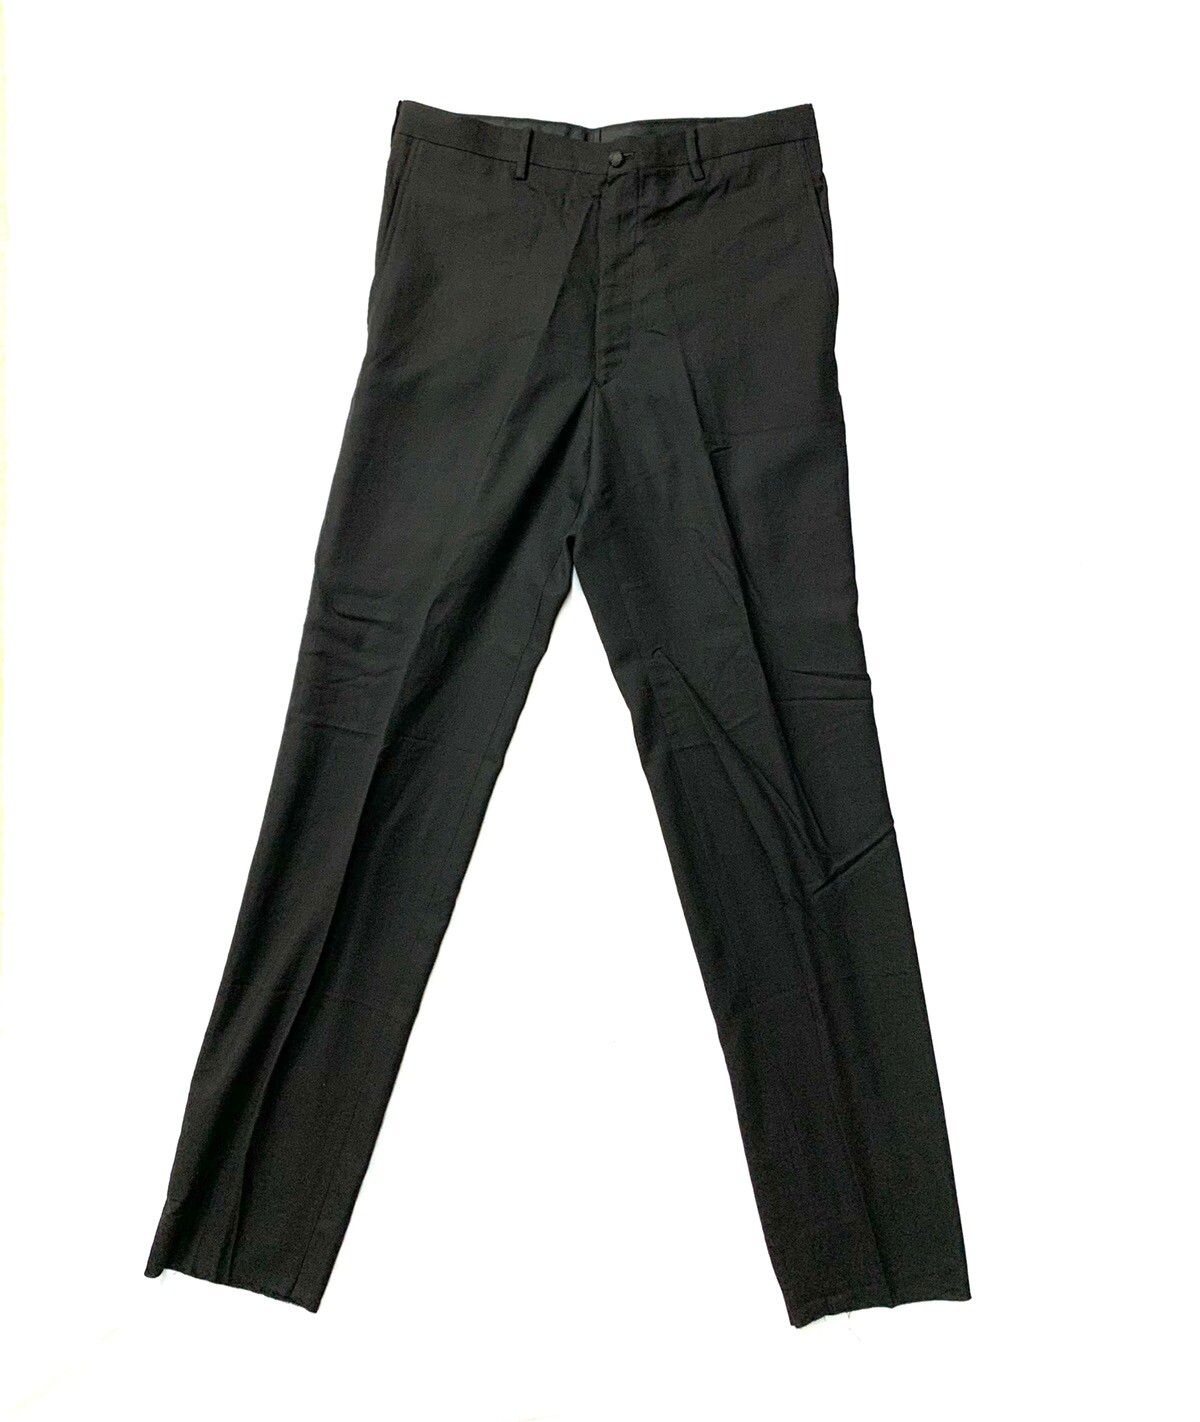 Yohji Yamamoto Yohji Yamamoto Pour Homme SS2003 Black Pants | Grailed